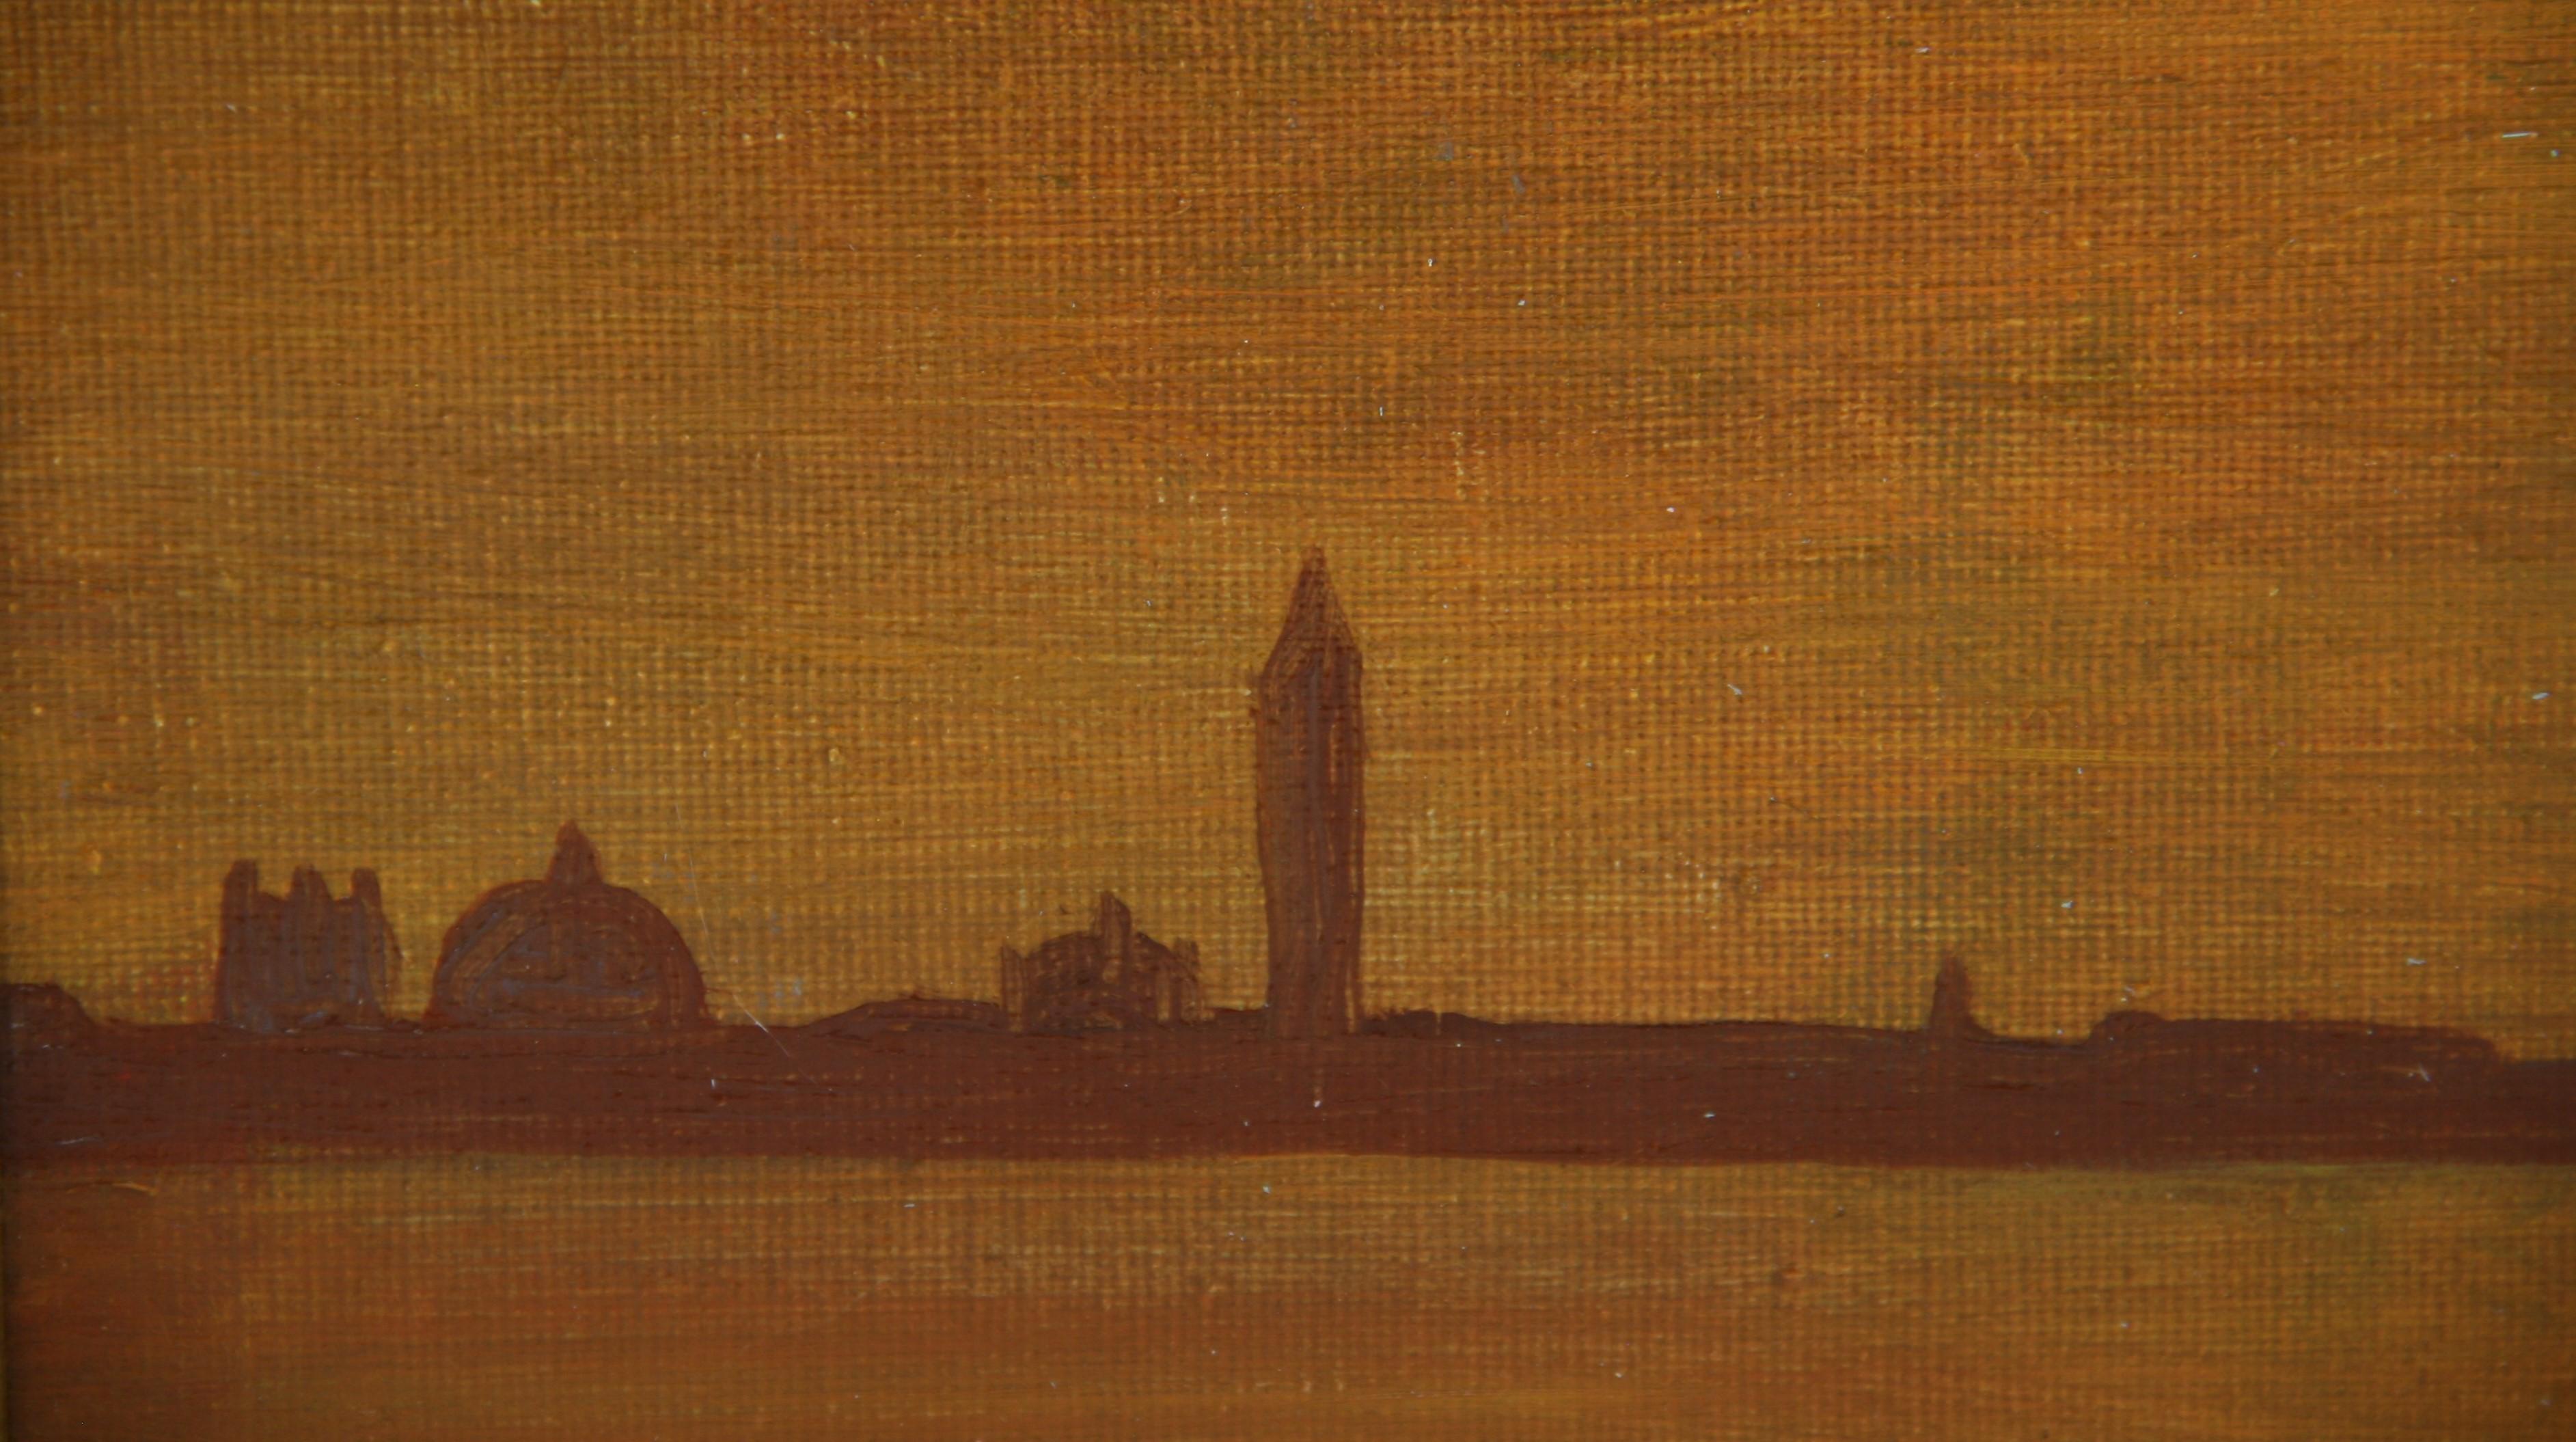 Venice Night Landscape - Painting by Arturo Ricci